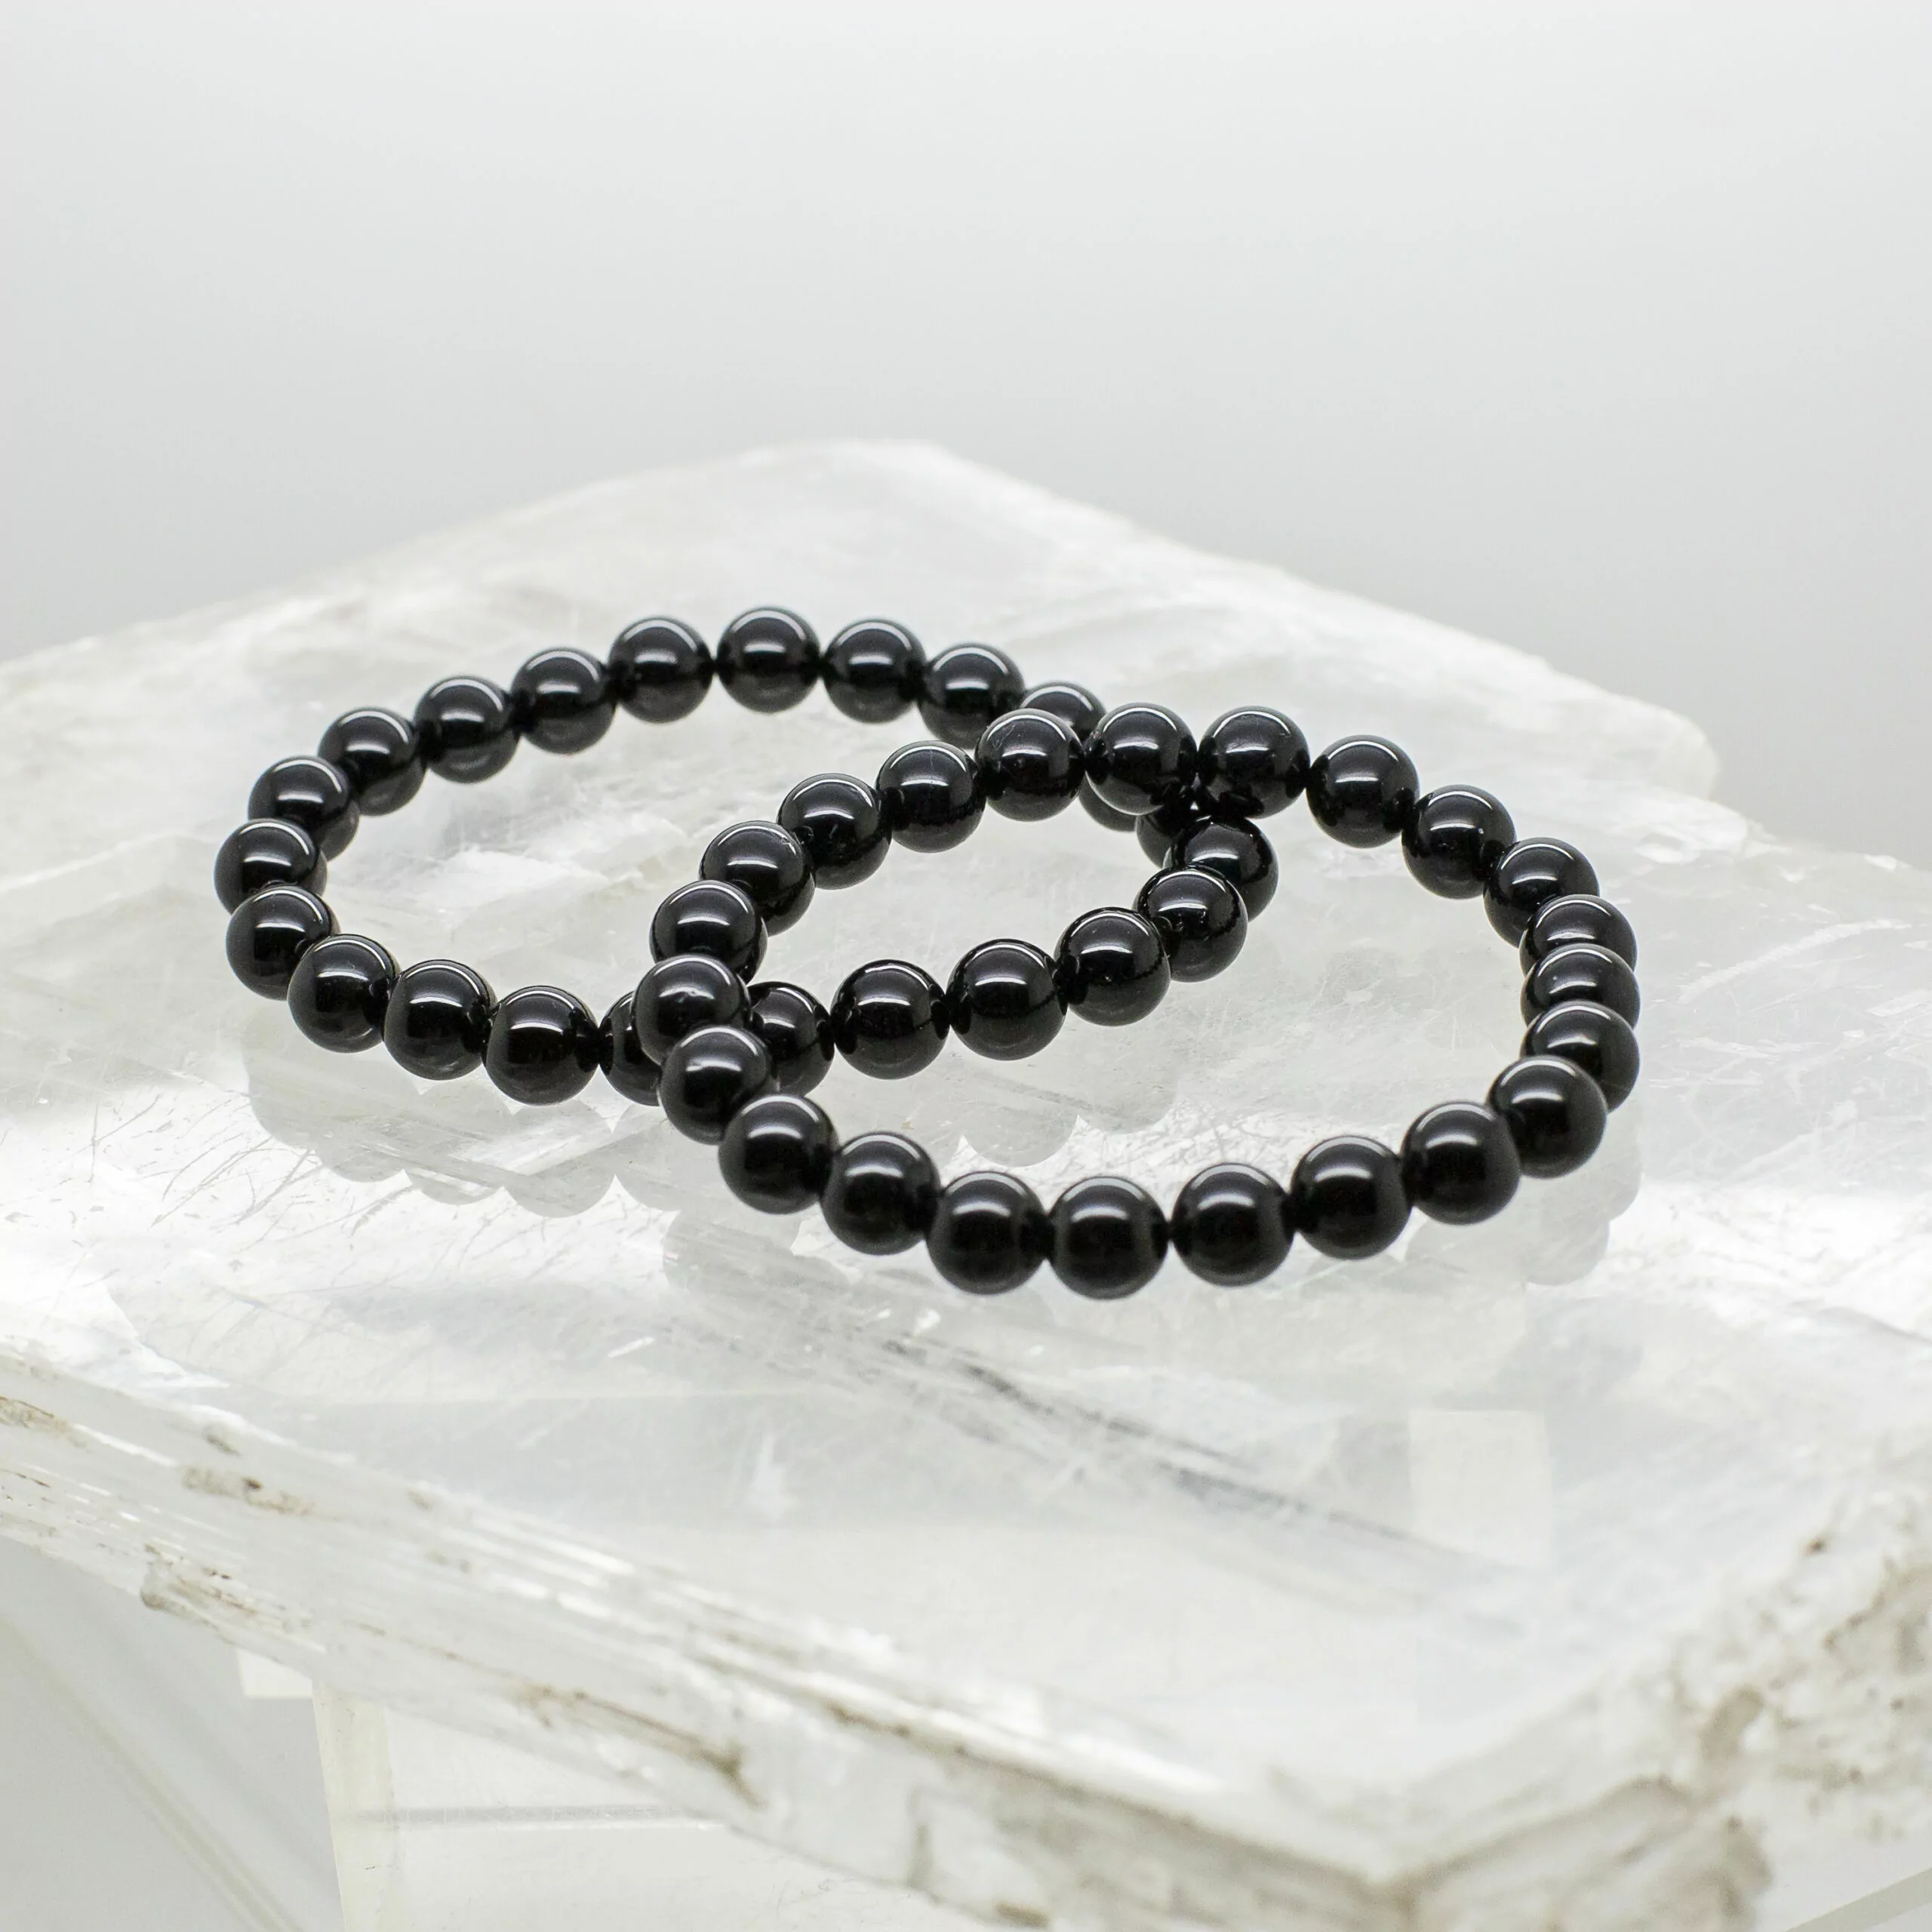 black tourmaline 8mm bead bracelet